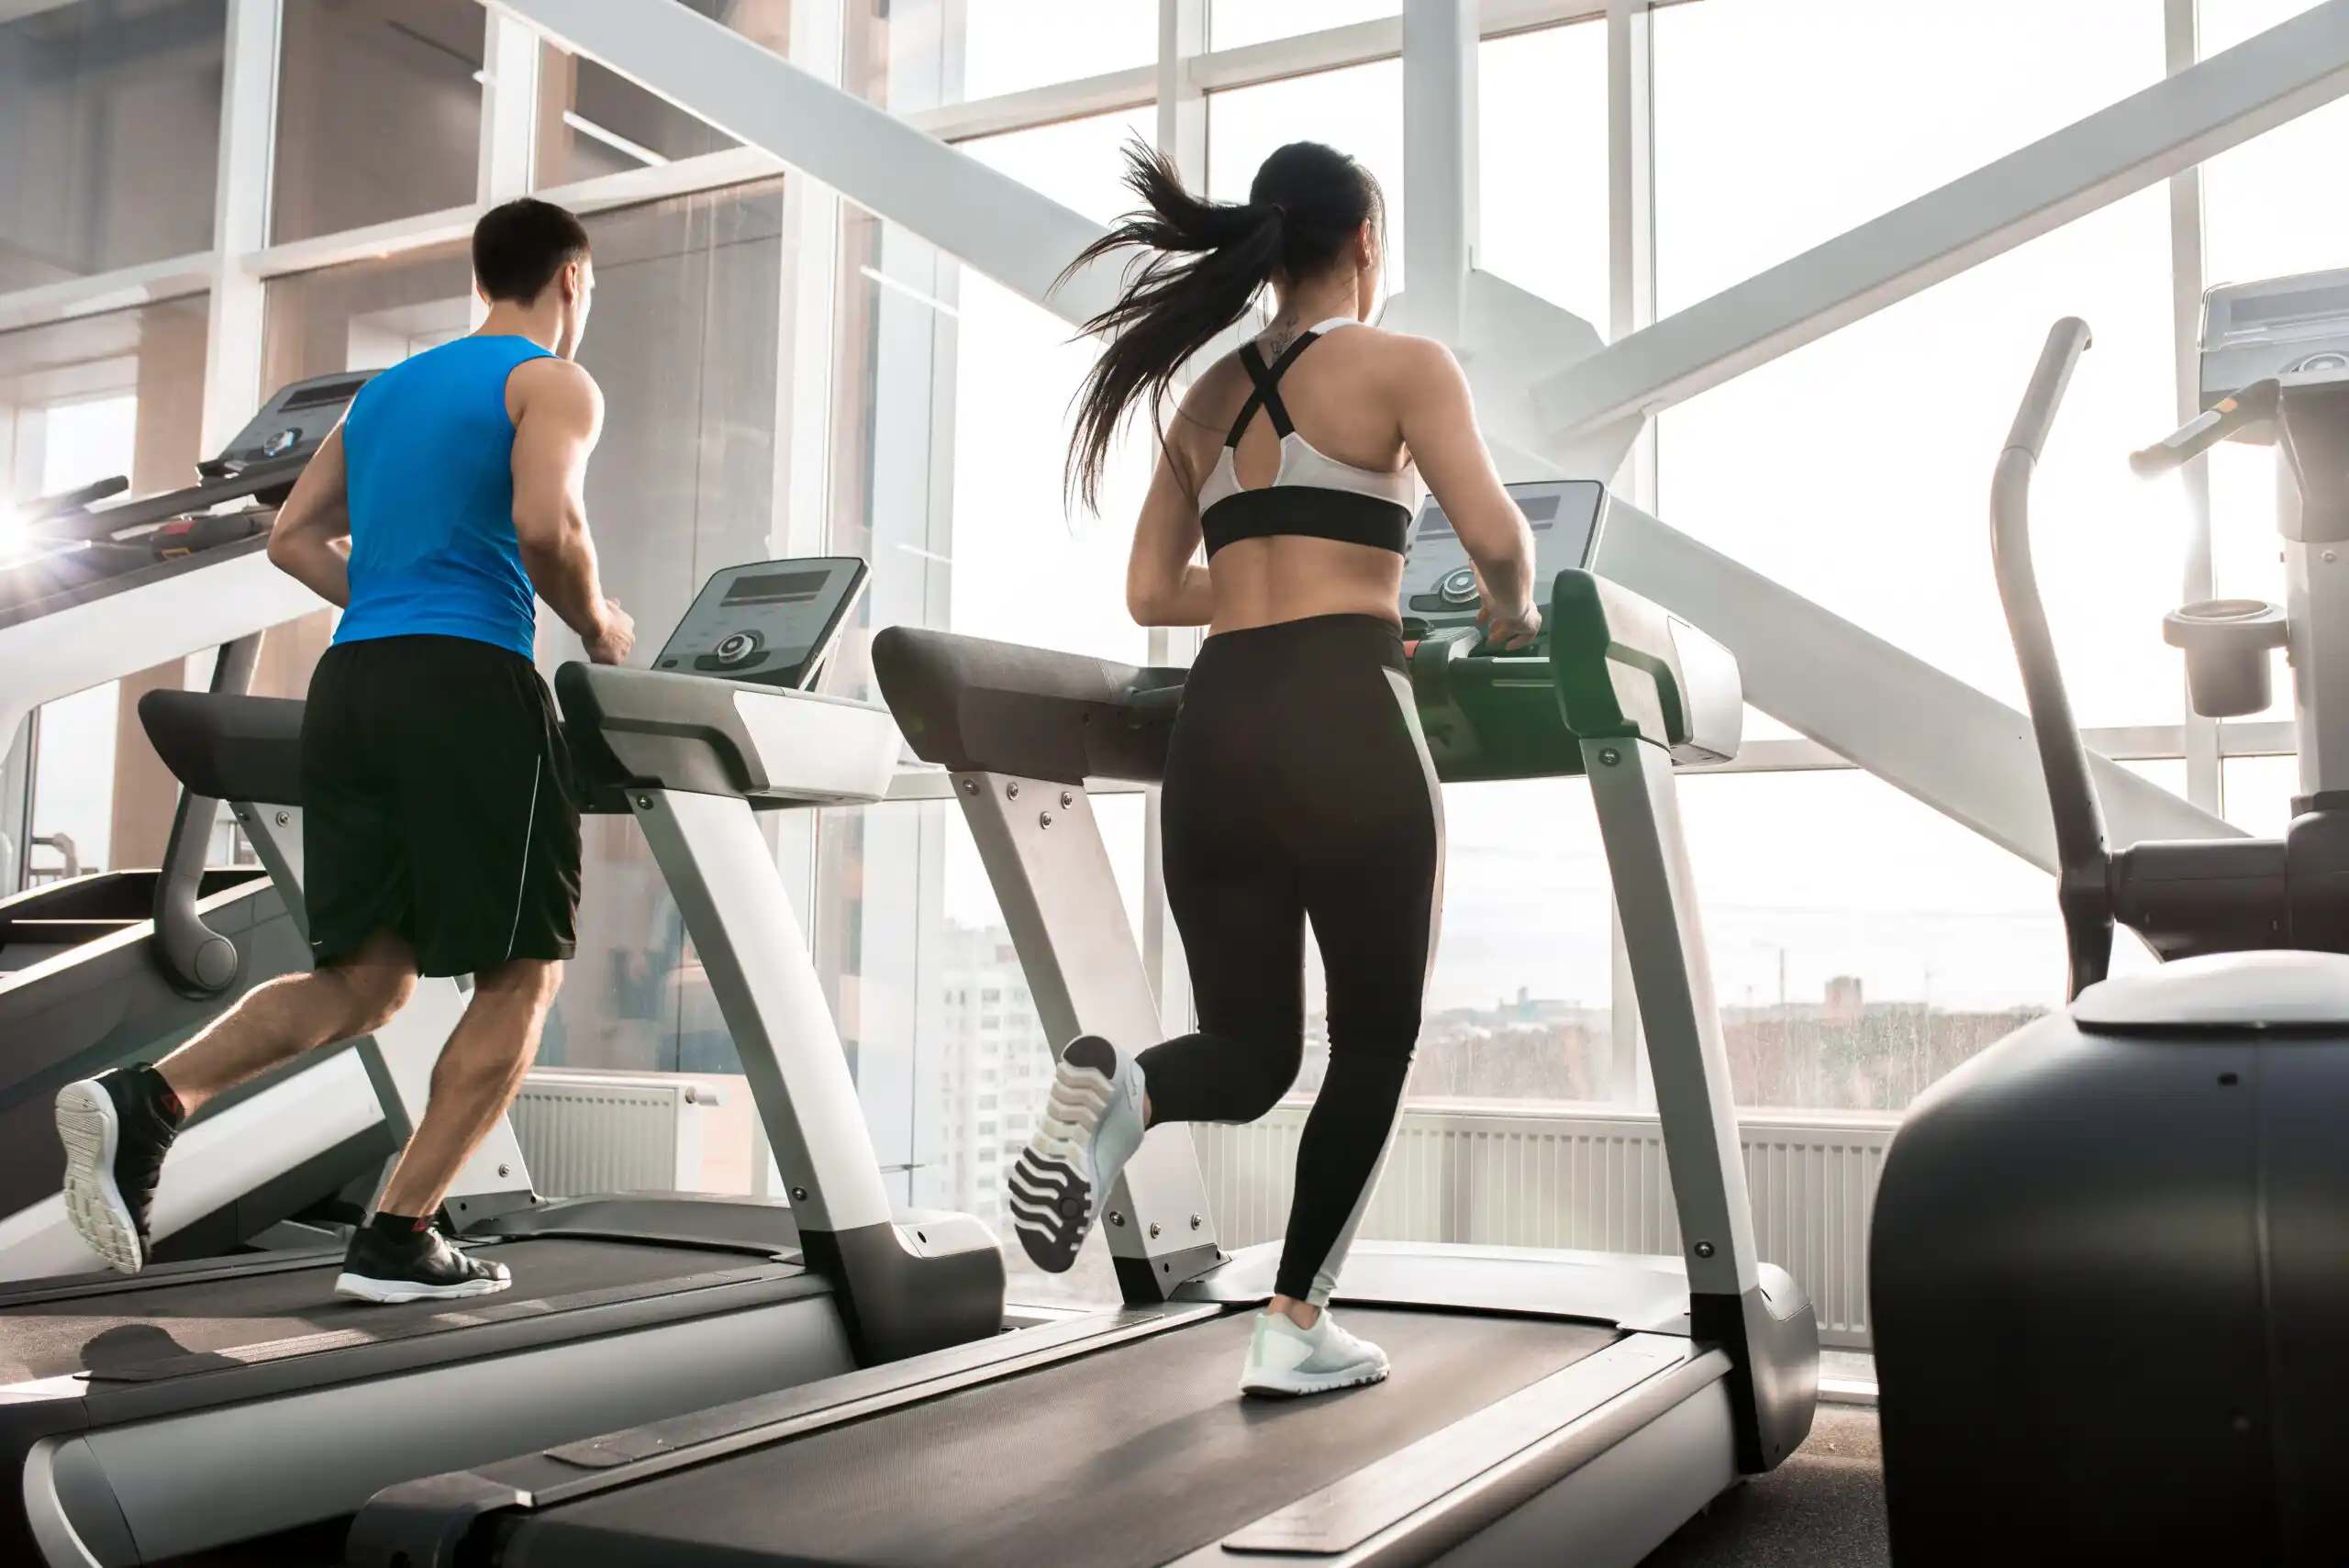 Gym Members Running on Treadmill